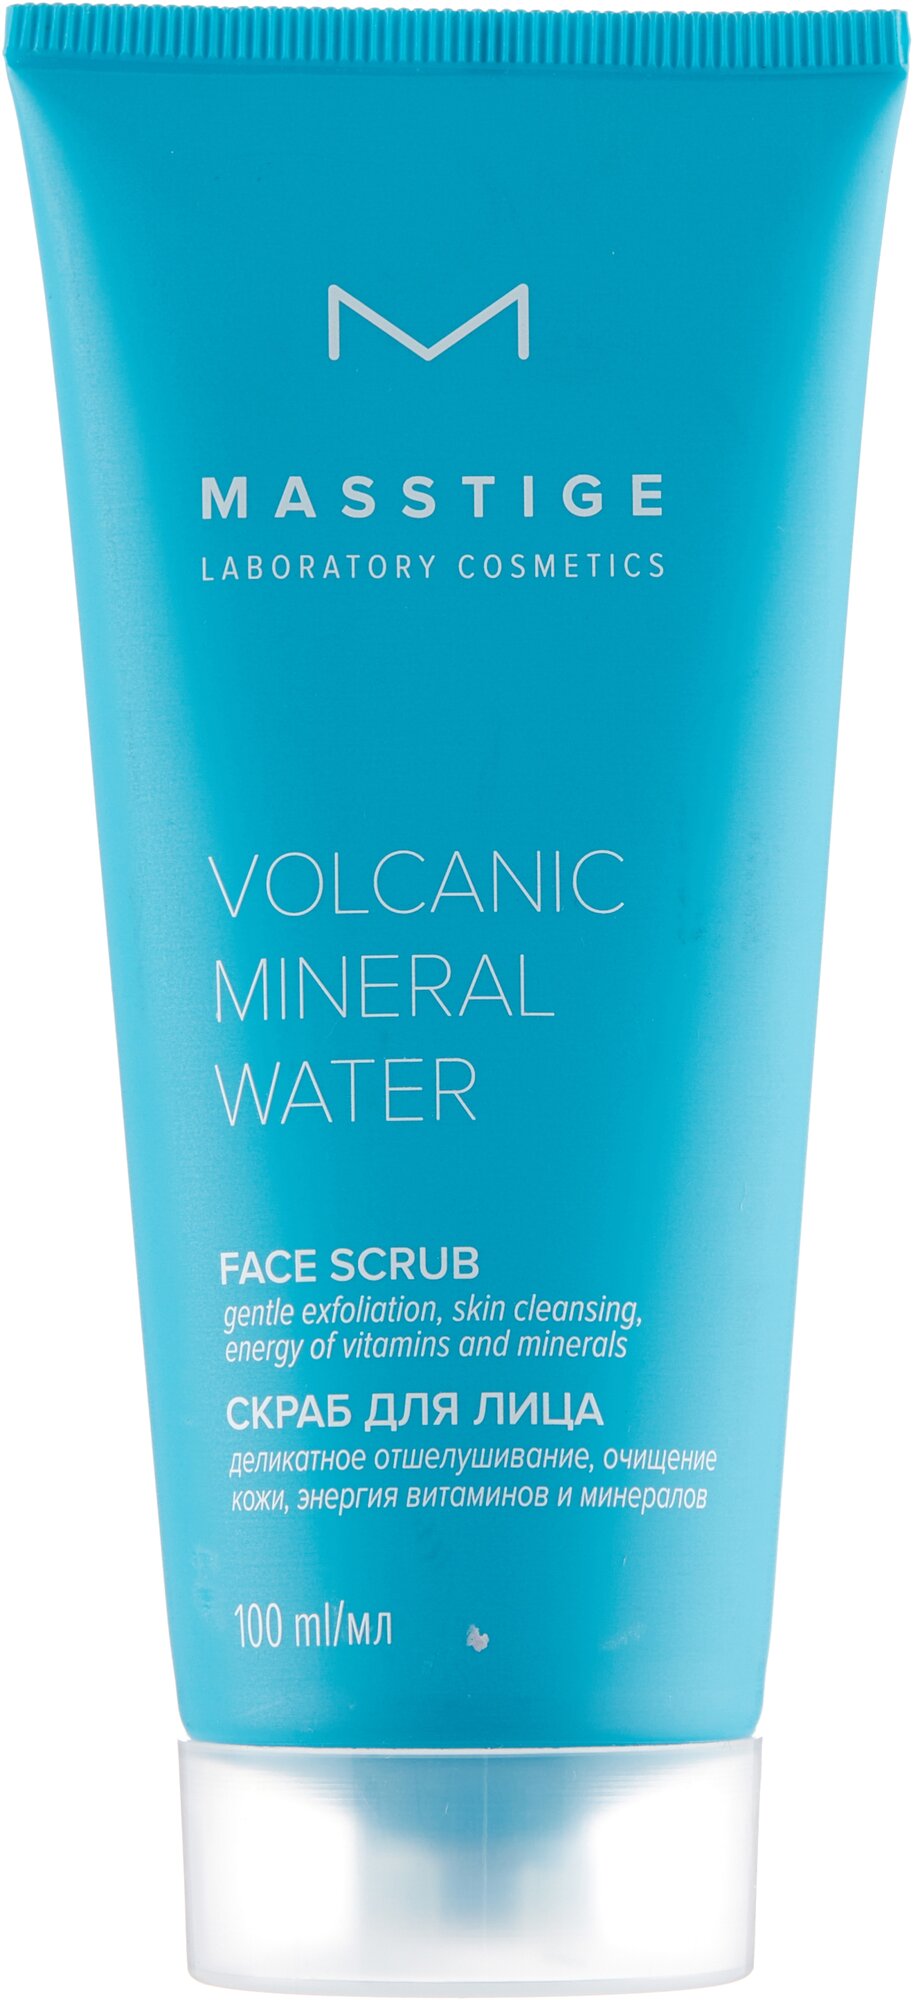 Masstige скраб для лица Volcanic Mineral Water Face scrub